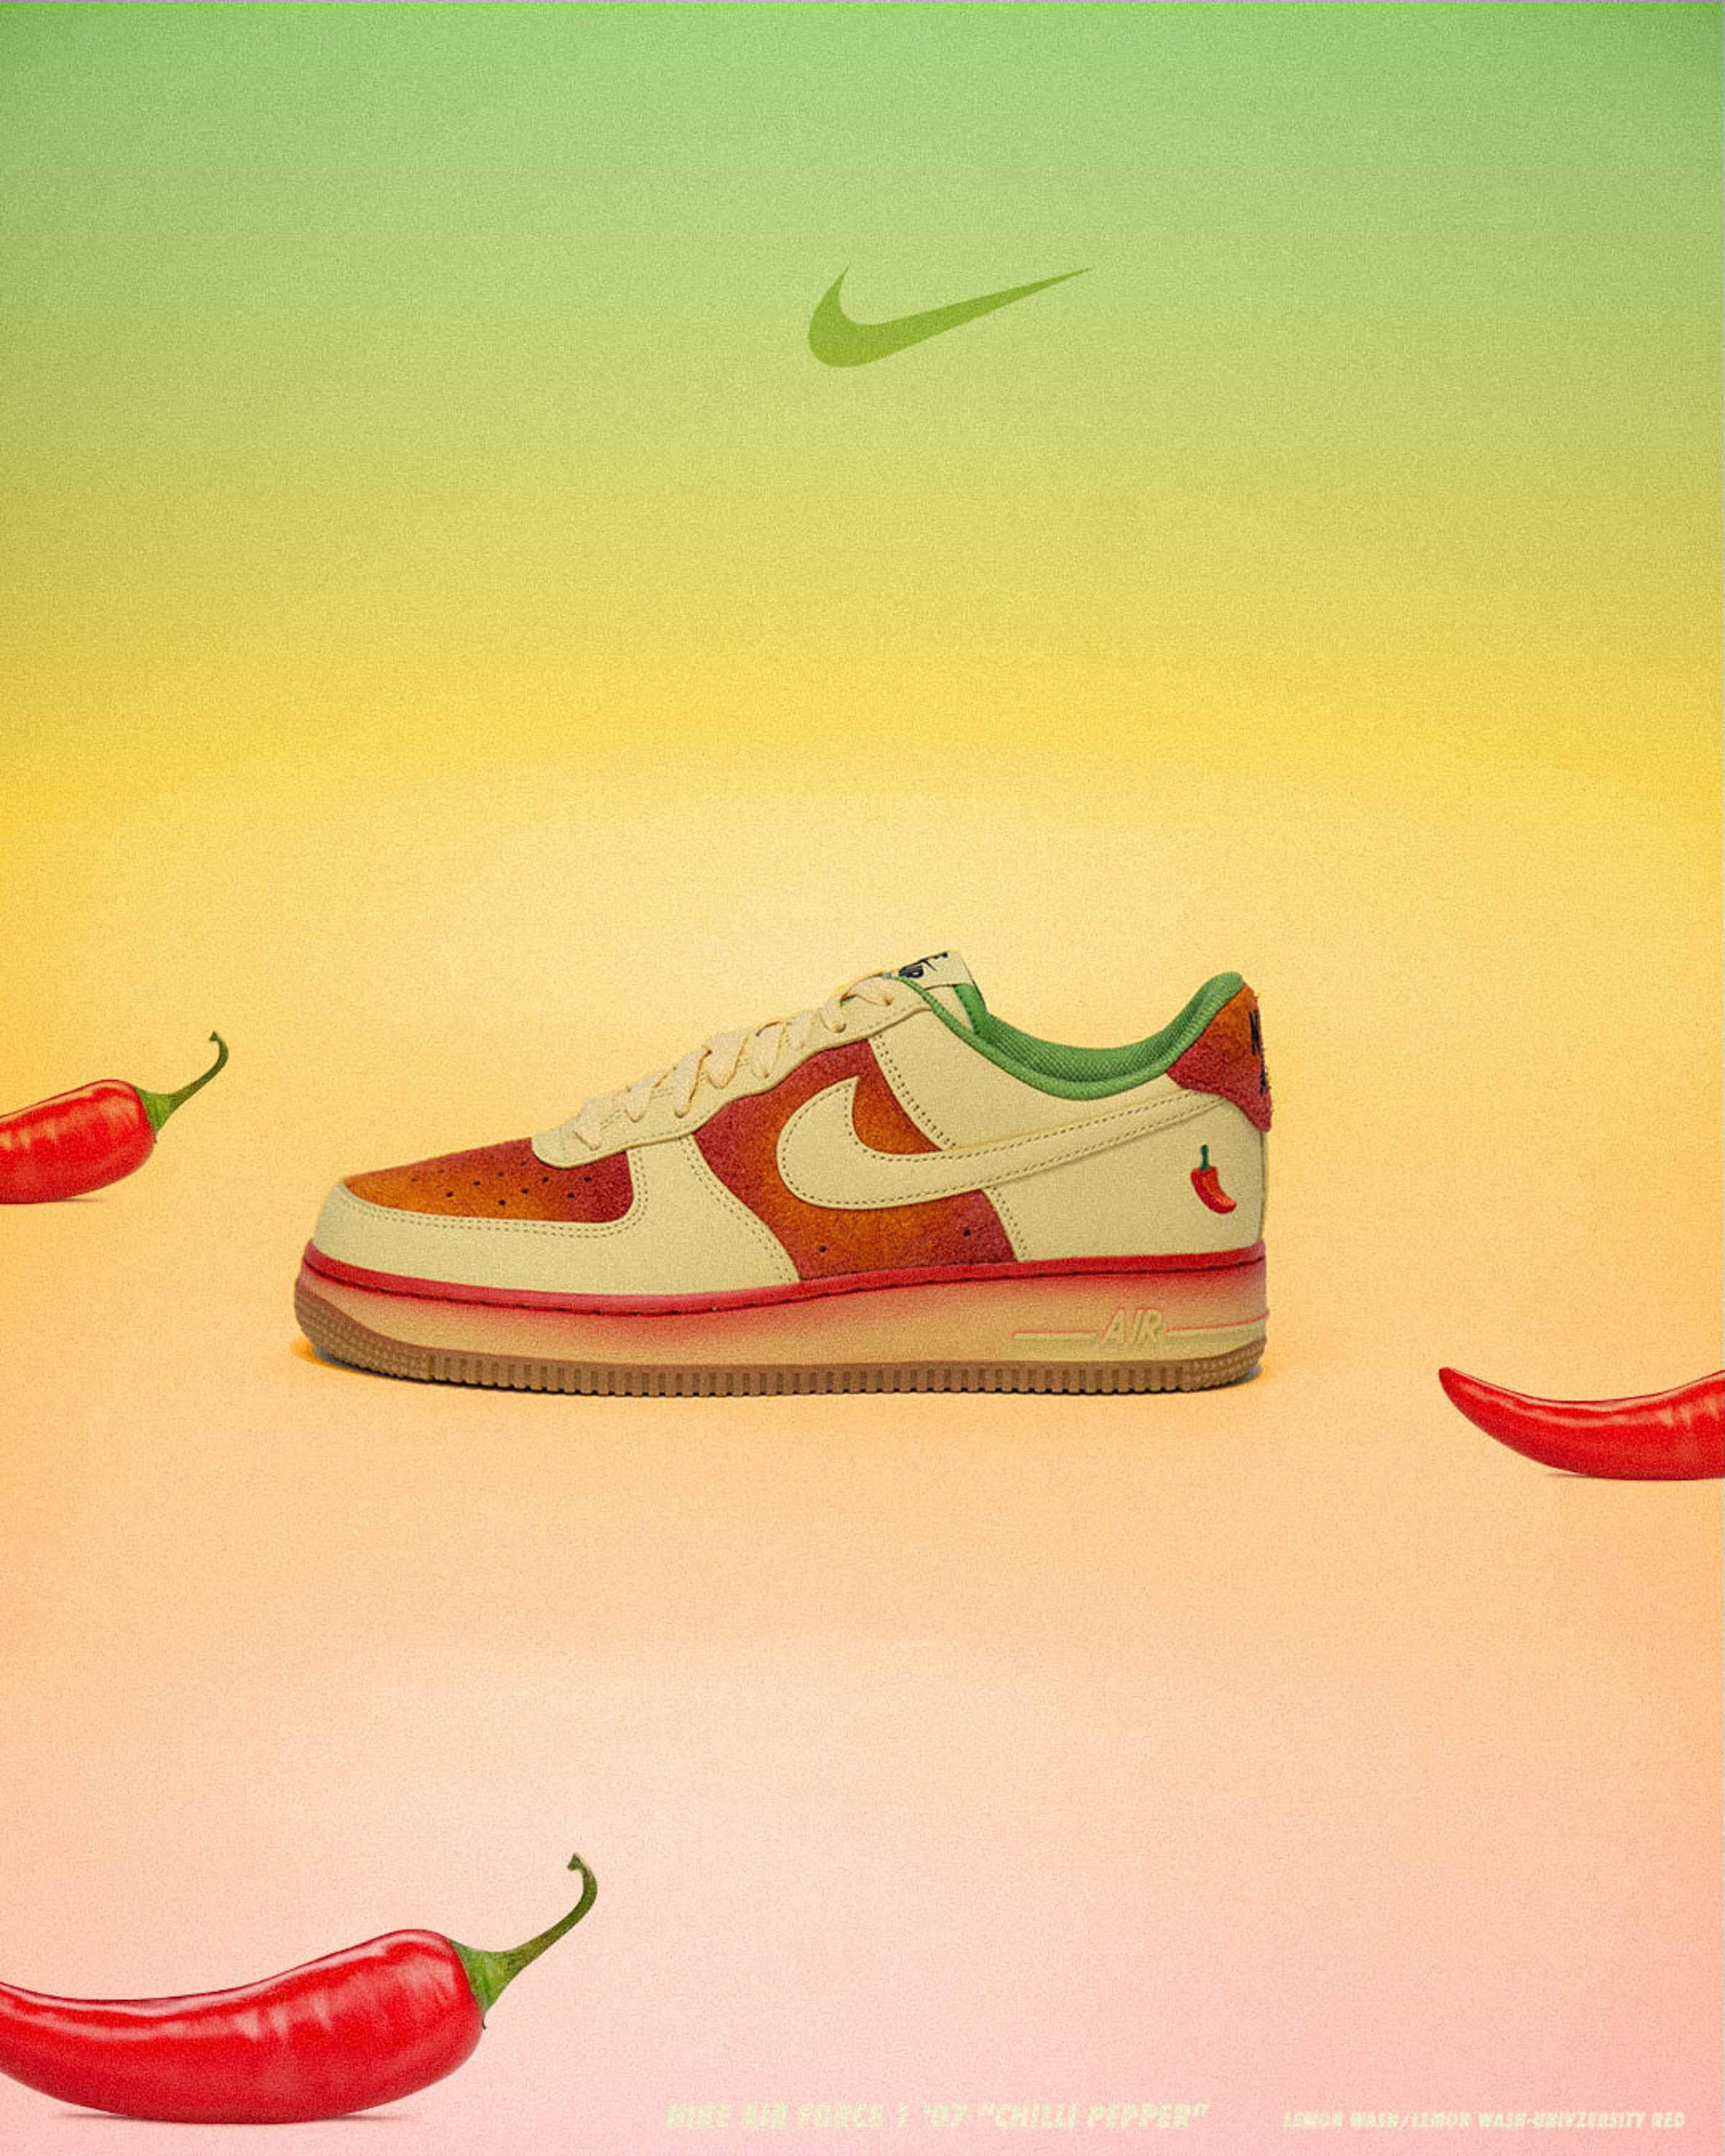 Nike AIR FORCE 1 '07 "Chilli Pepper"